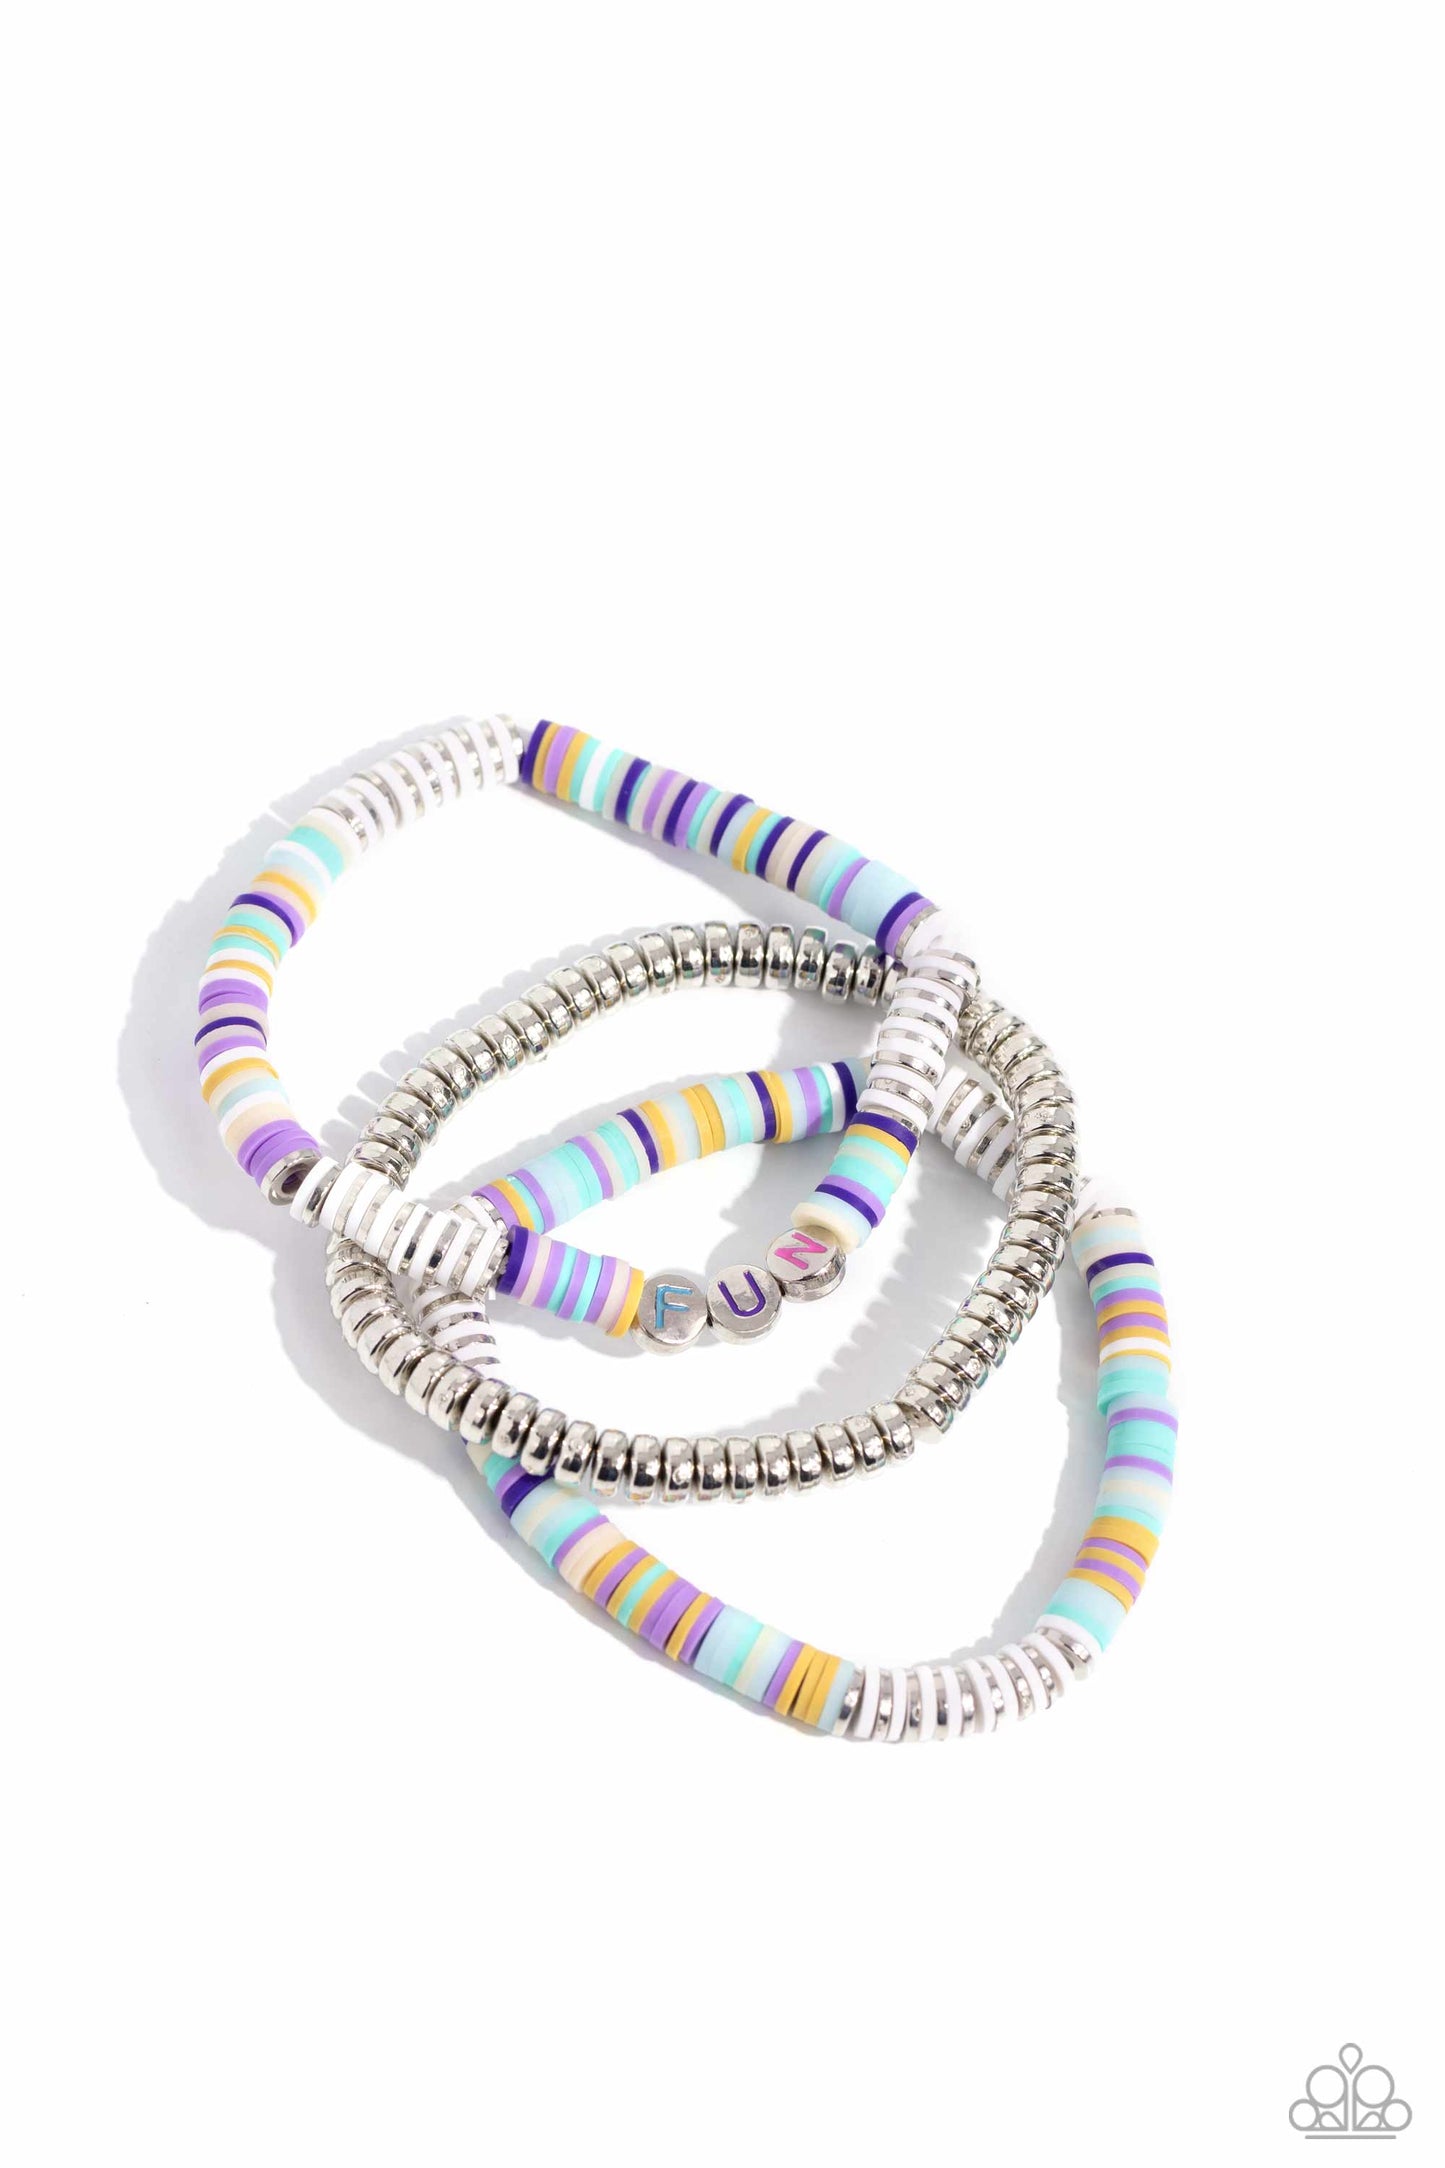 Paparazzi Bracelets - Just for Fun - White